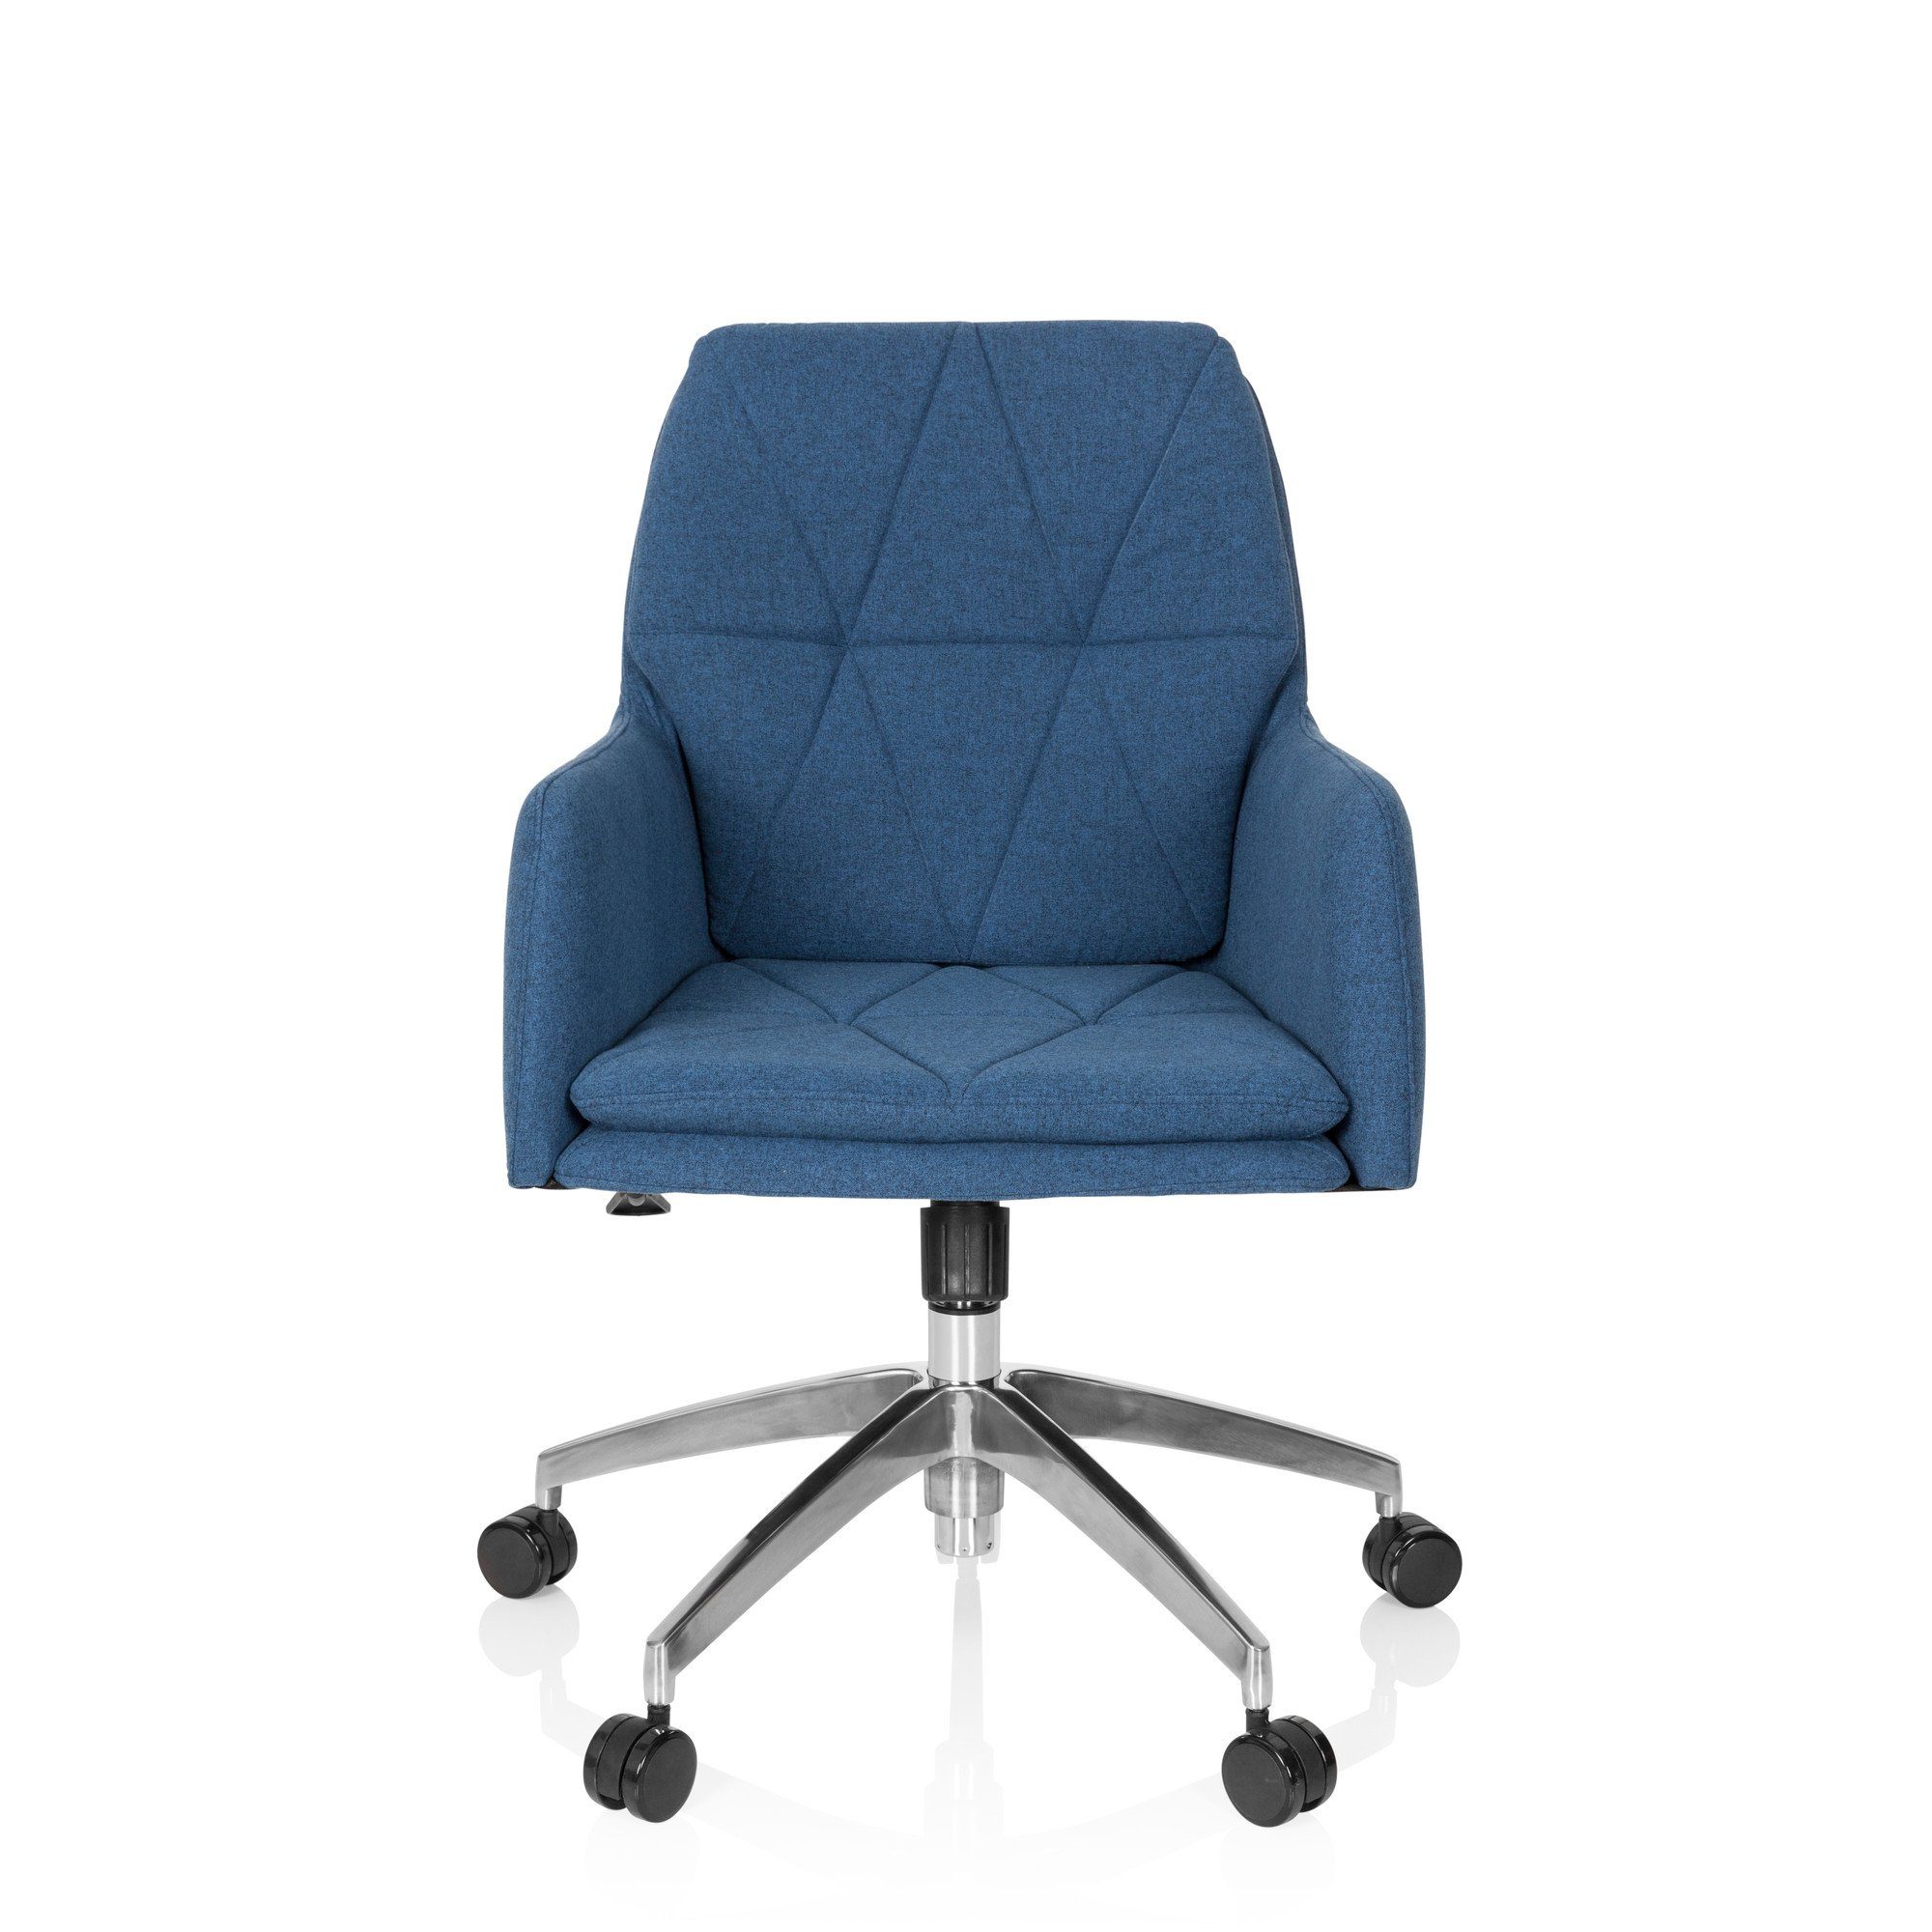 hjh OFFICE 670948 Home-Office Sessel Shake 350 Stoff Blau moderner Drehsessel mit Rollen höhenverstellbar